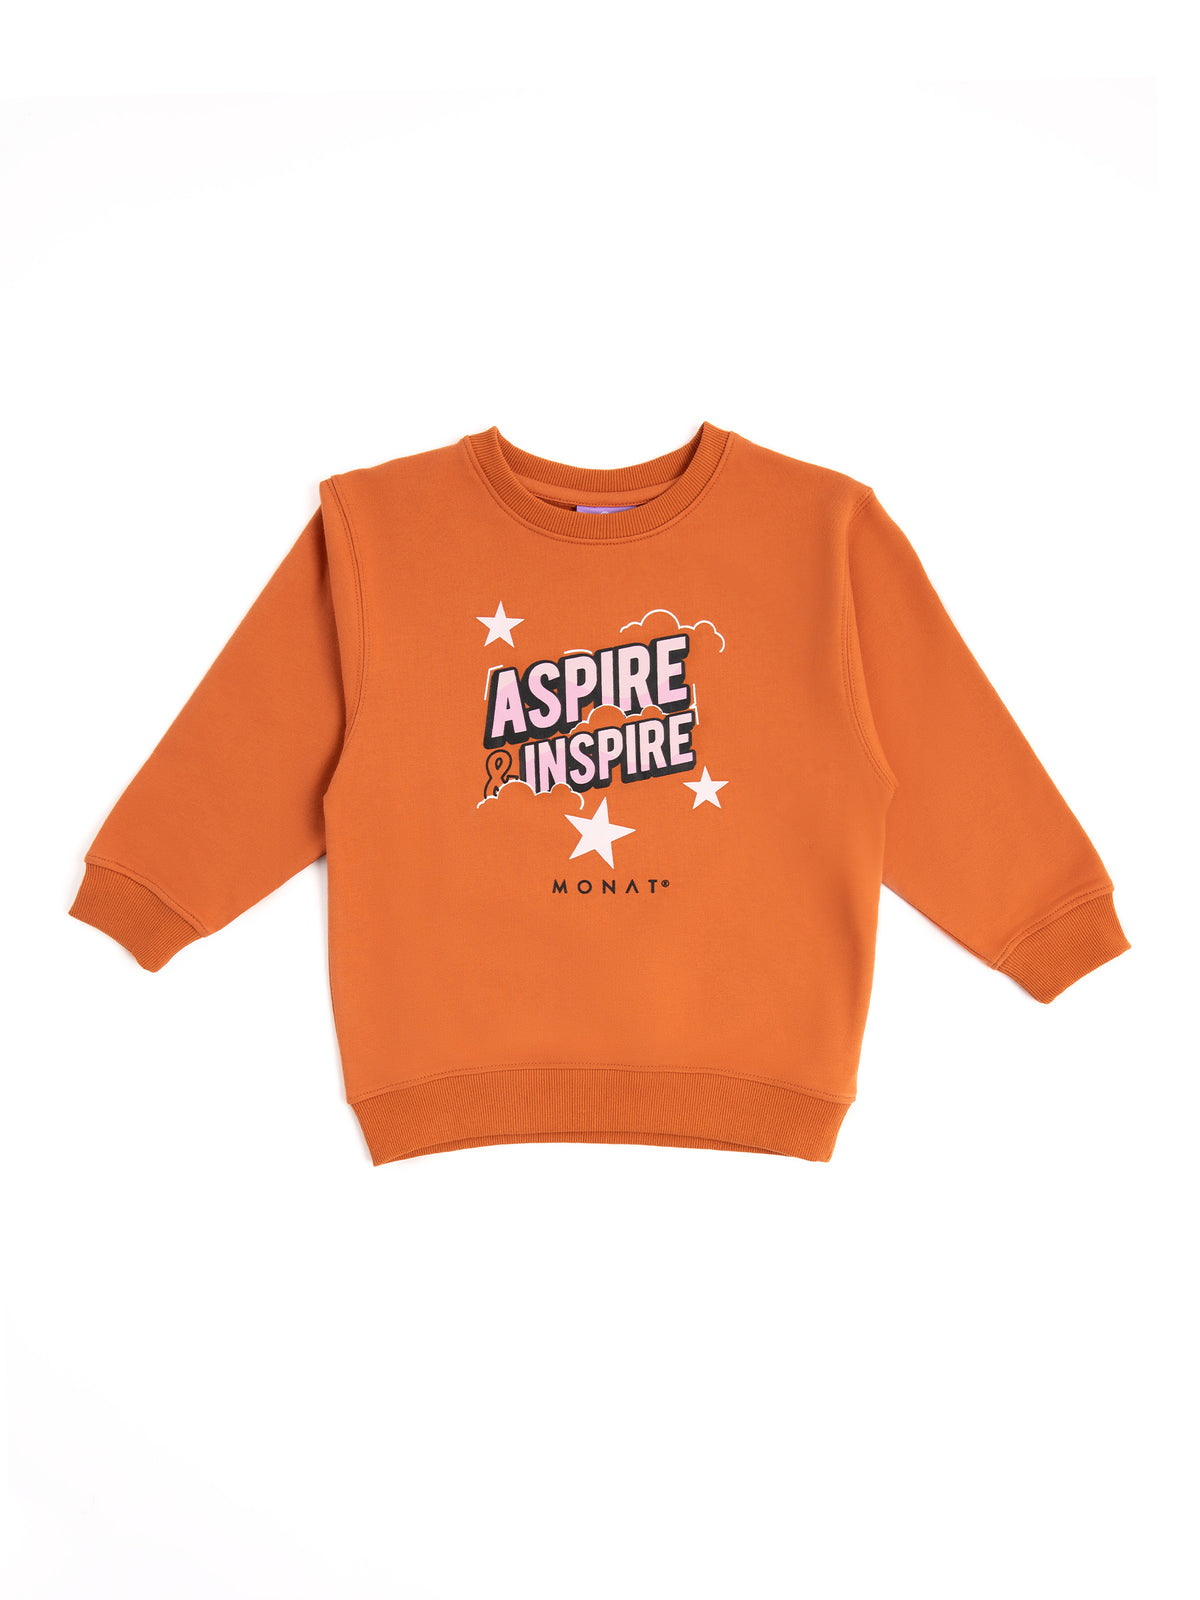 MONAT Junior Aspire & Inspire Sweatshirt